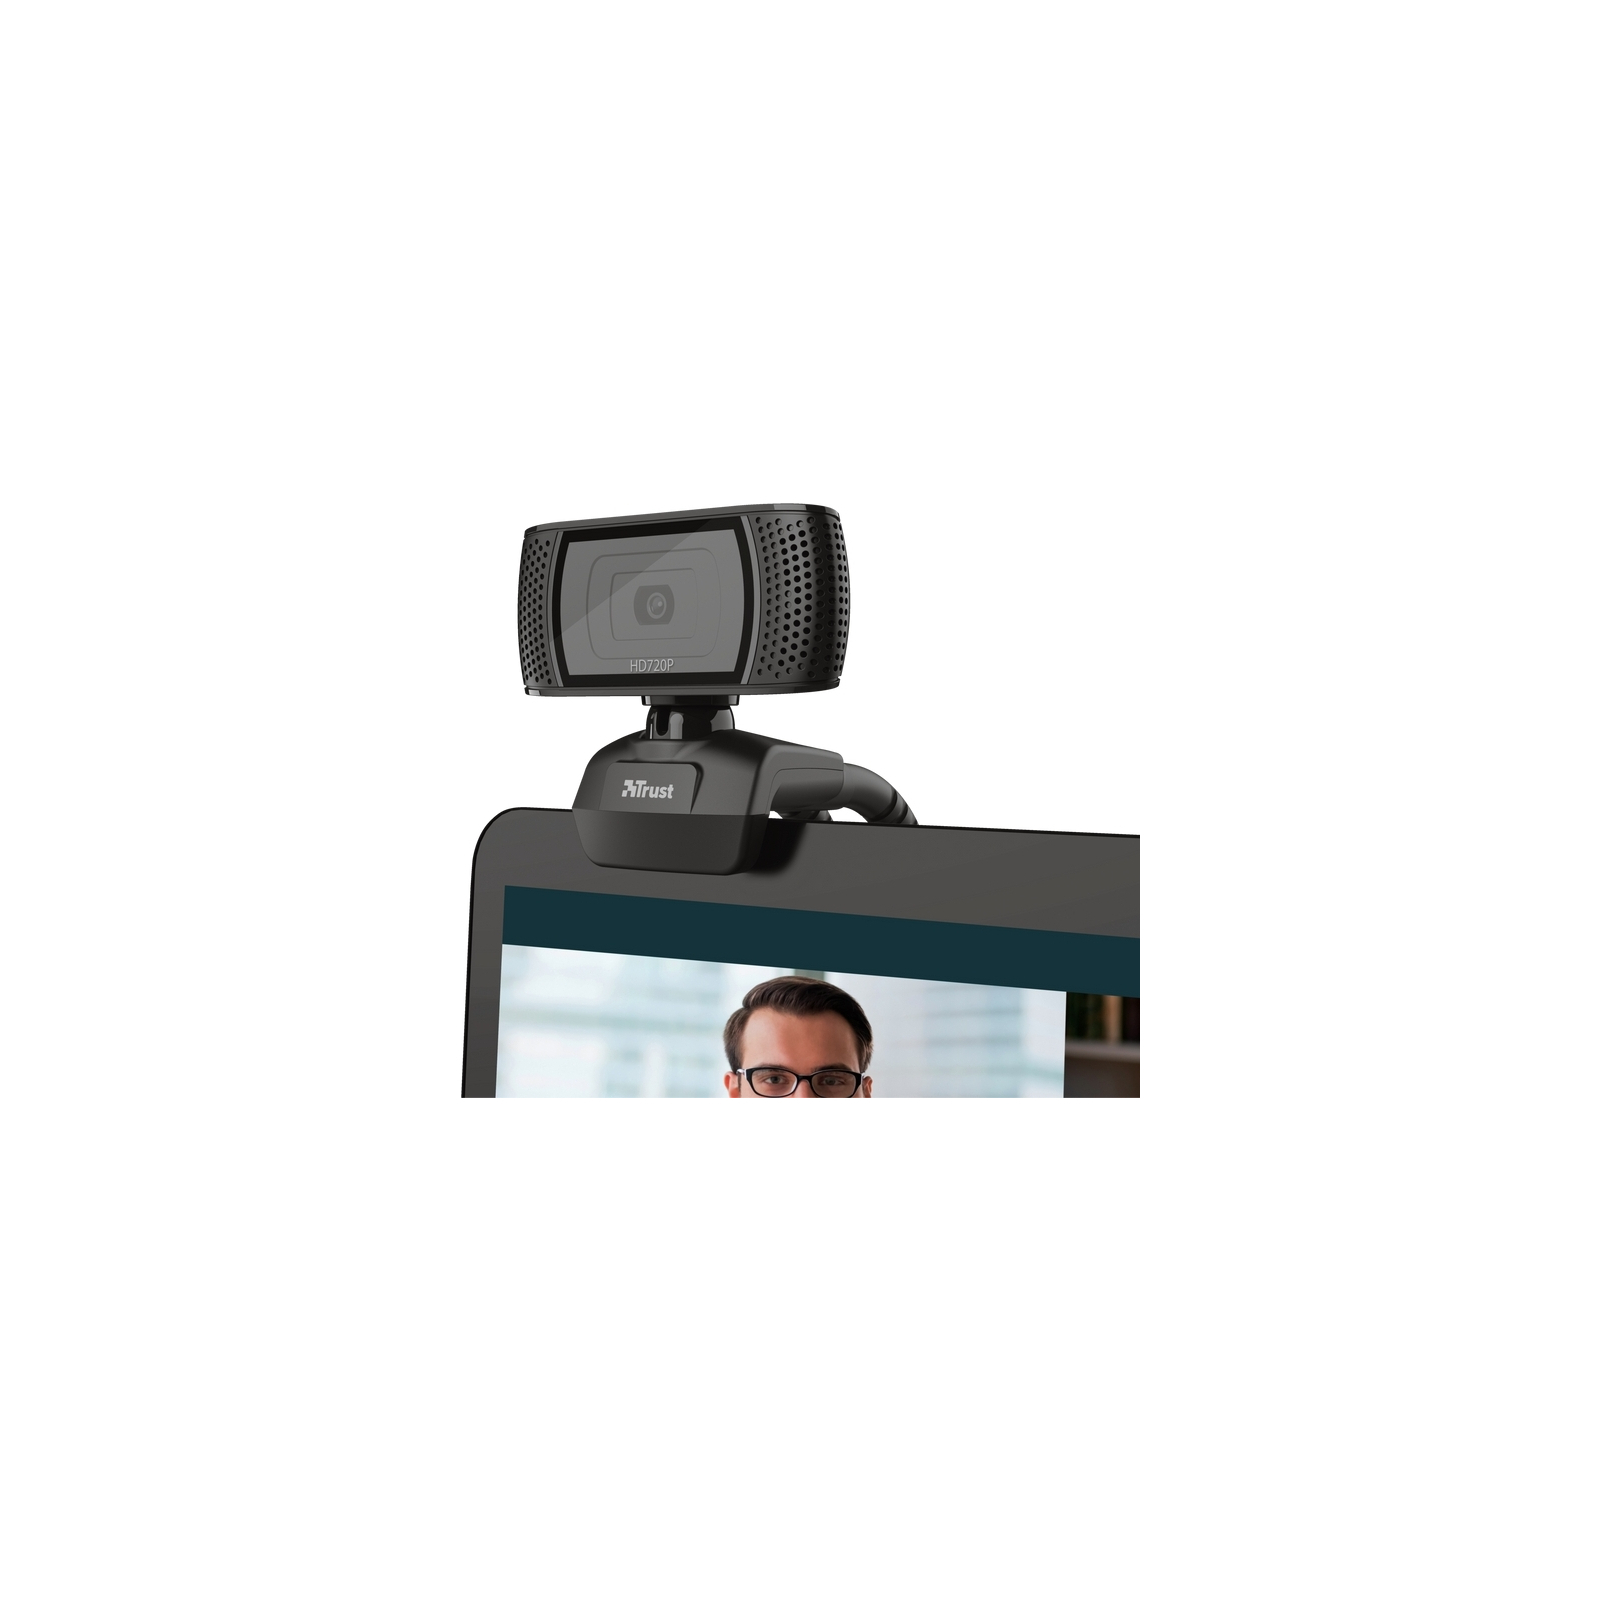 Веб-камера Trust Trino HD Video Webcam (18679) изображение 6